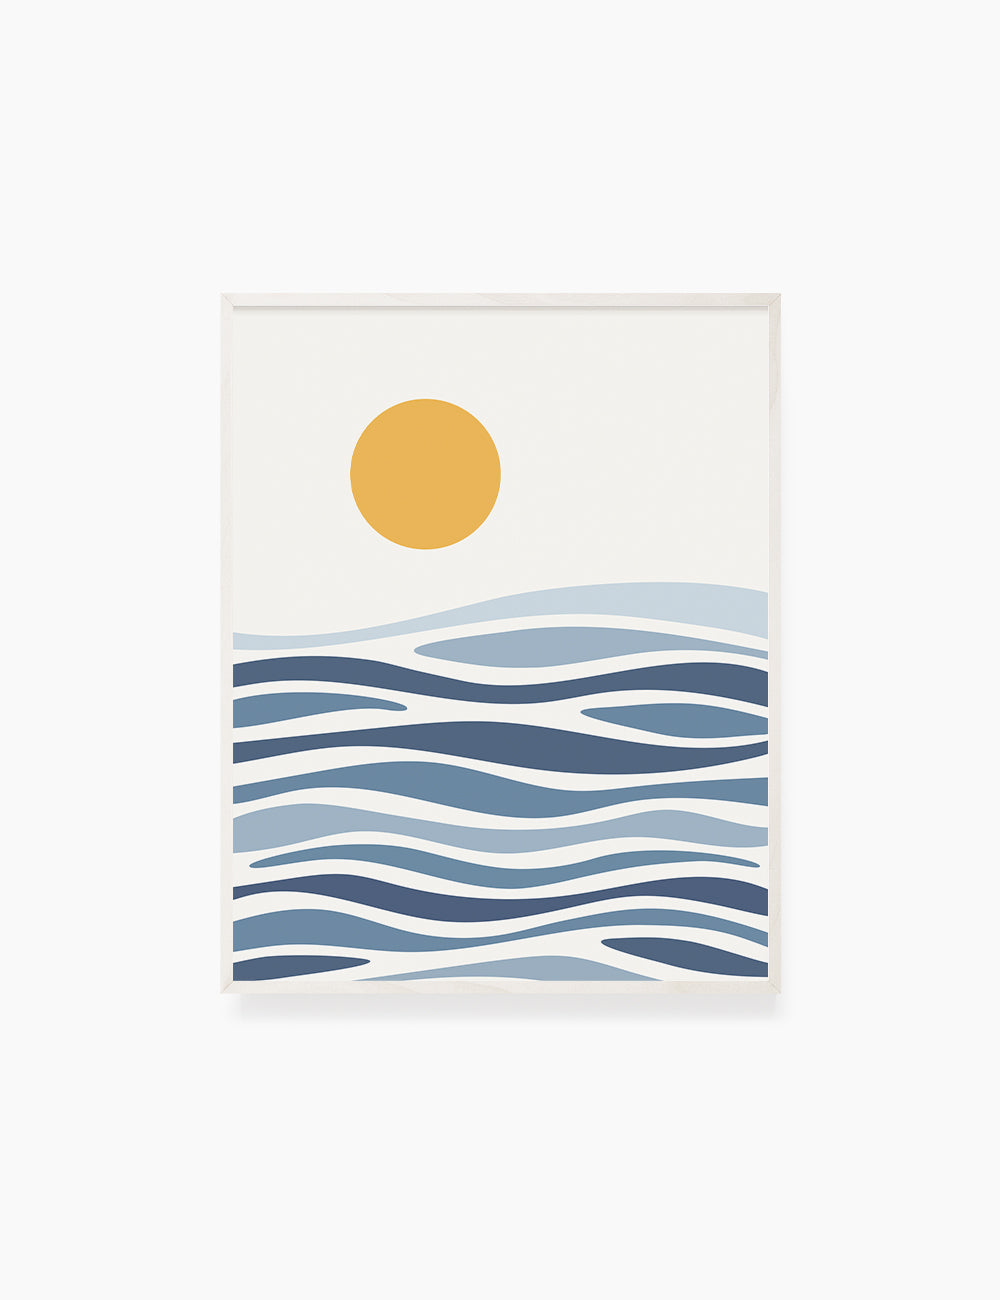 SUN OVER THE BLUE OCEAN WAVES. BOHO ART. Minimalist. Abstract. Printable Wall Art Illustration. - PAPER MOON Art & Design